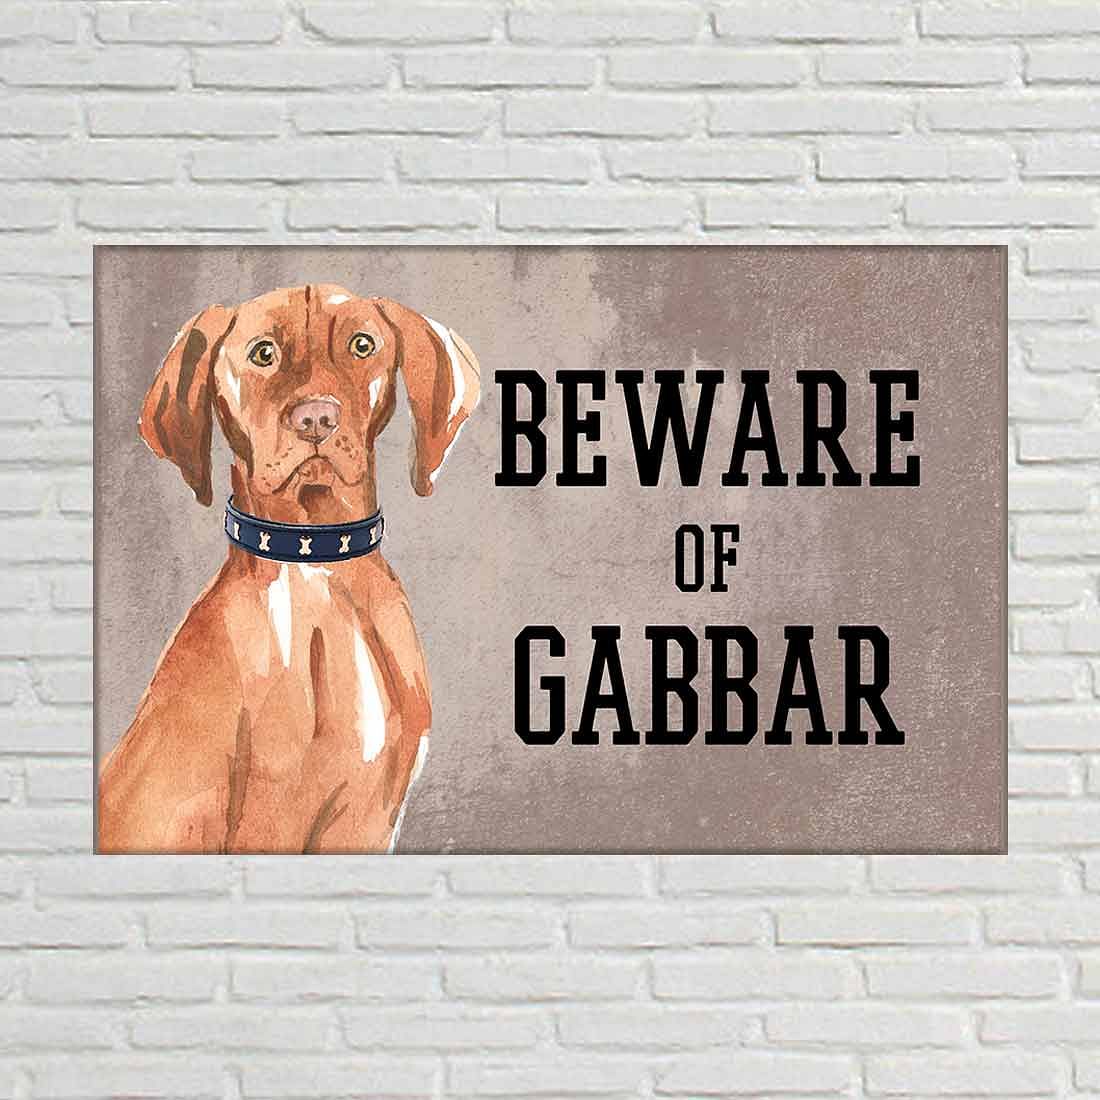 Personalized Dog Name Plates Beware Of Dog Sign - Hungarian Vizsla Nutcase